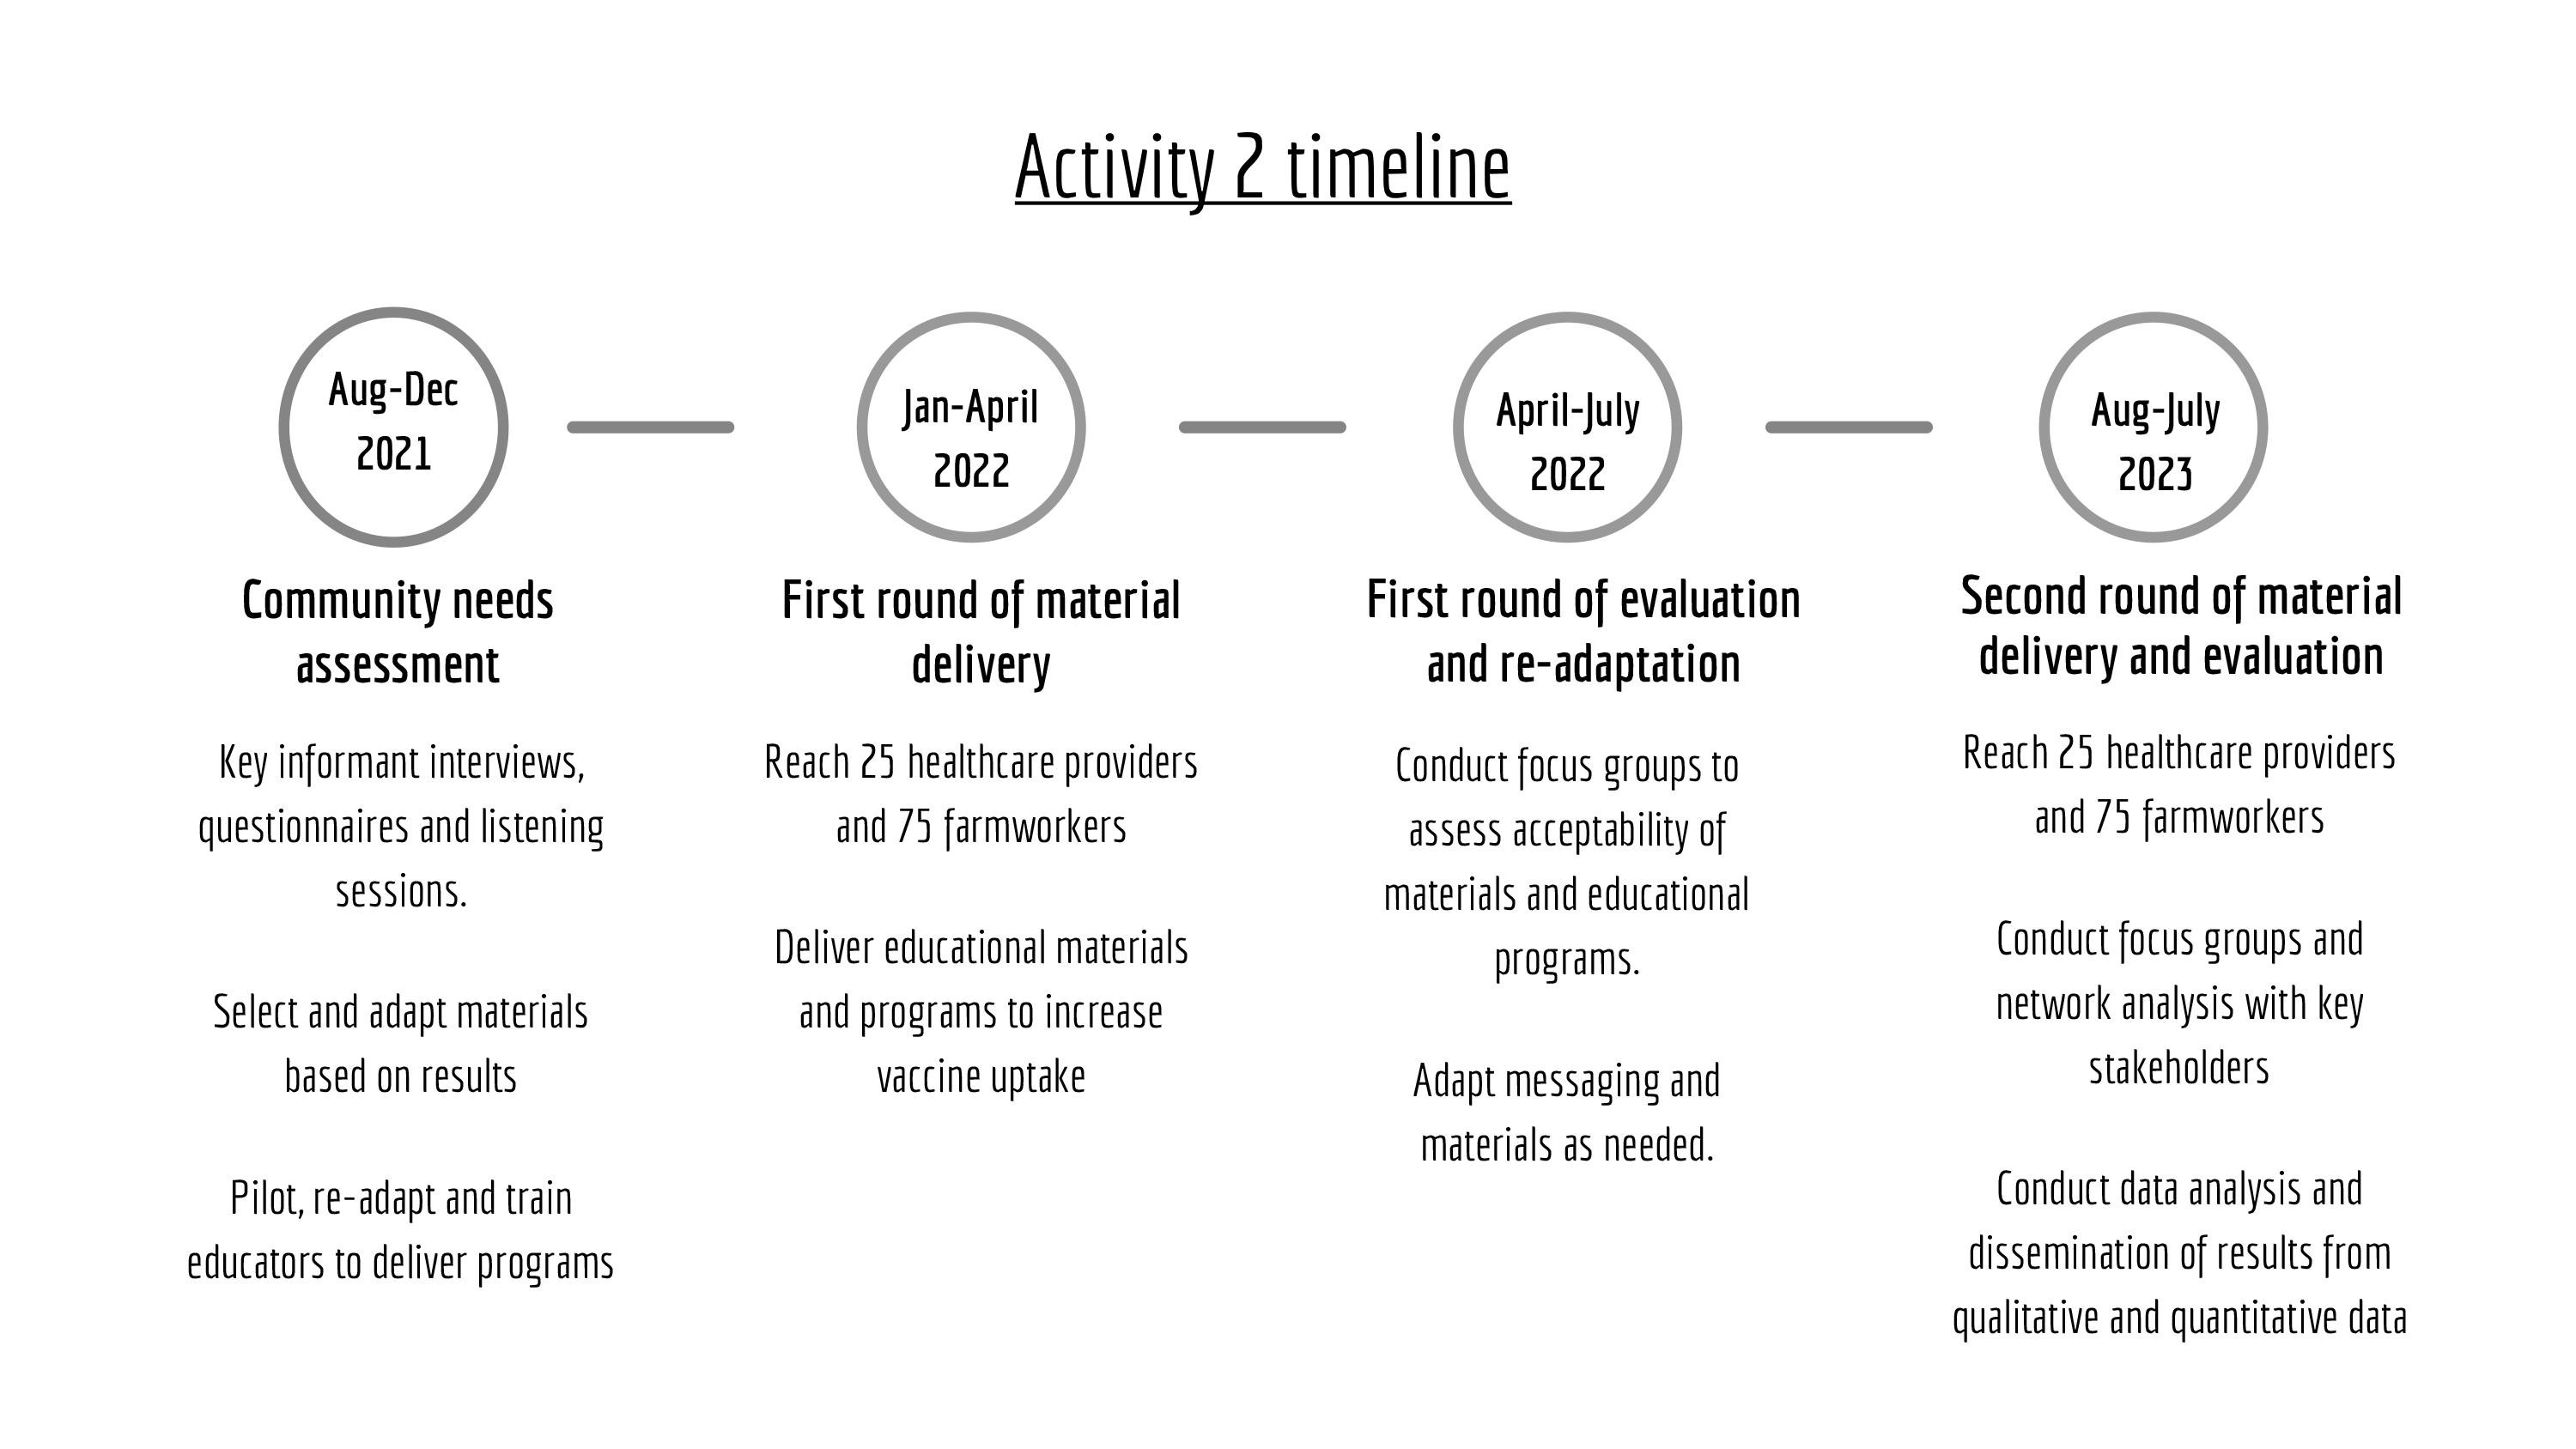 EXCITE activity 2 timeline